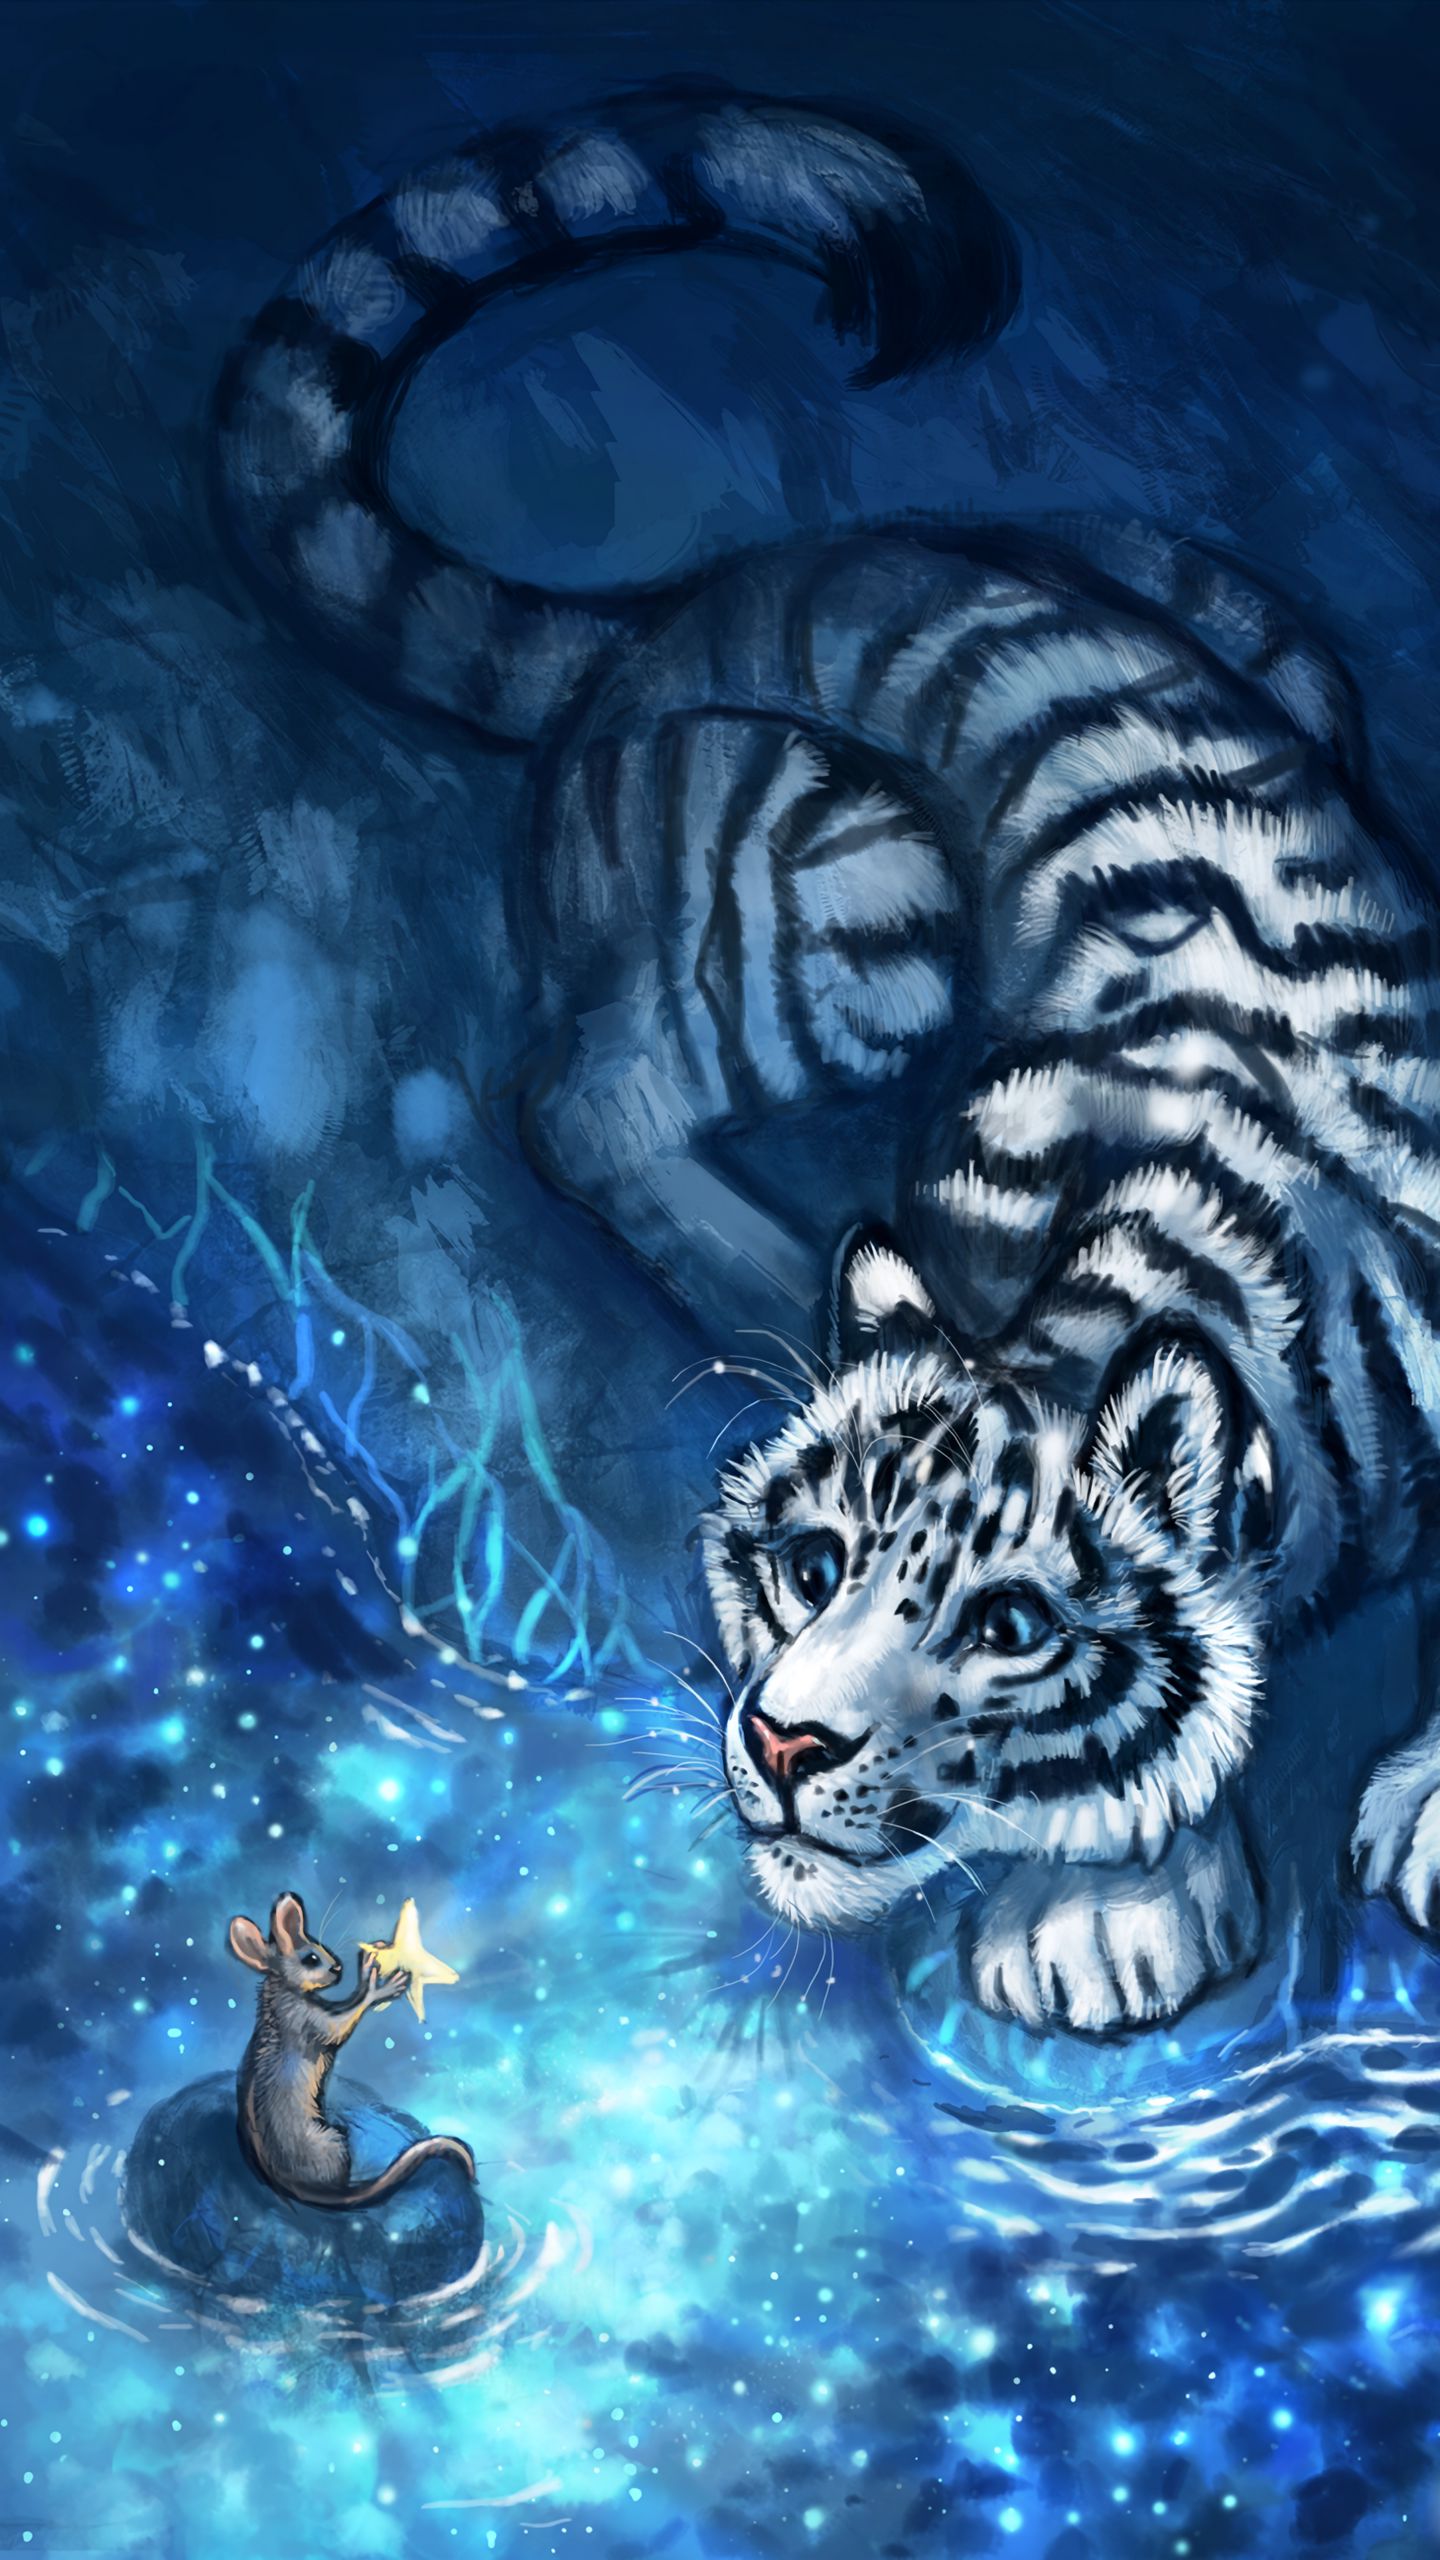 Download wallpaper 1440x2560 tiger, mouse, cub, art, animals, cute qhd  samsung galaxy s6, s7, edge, note, lg g4 hd background